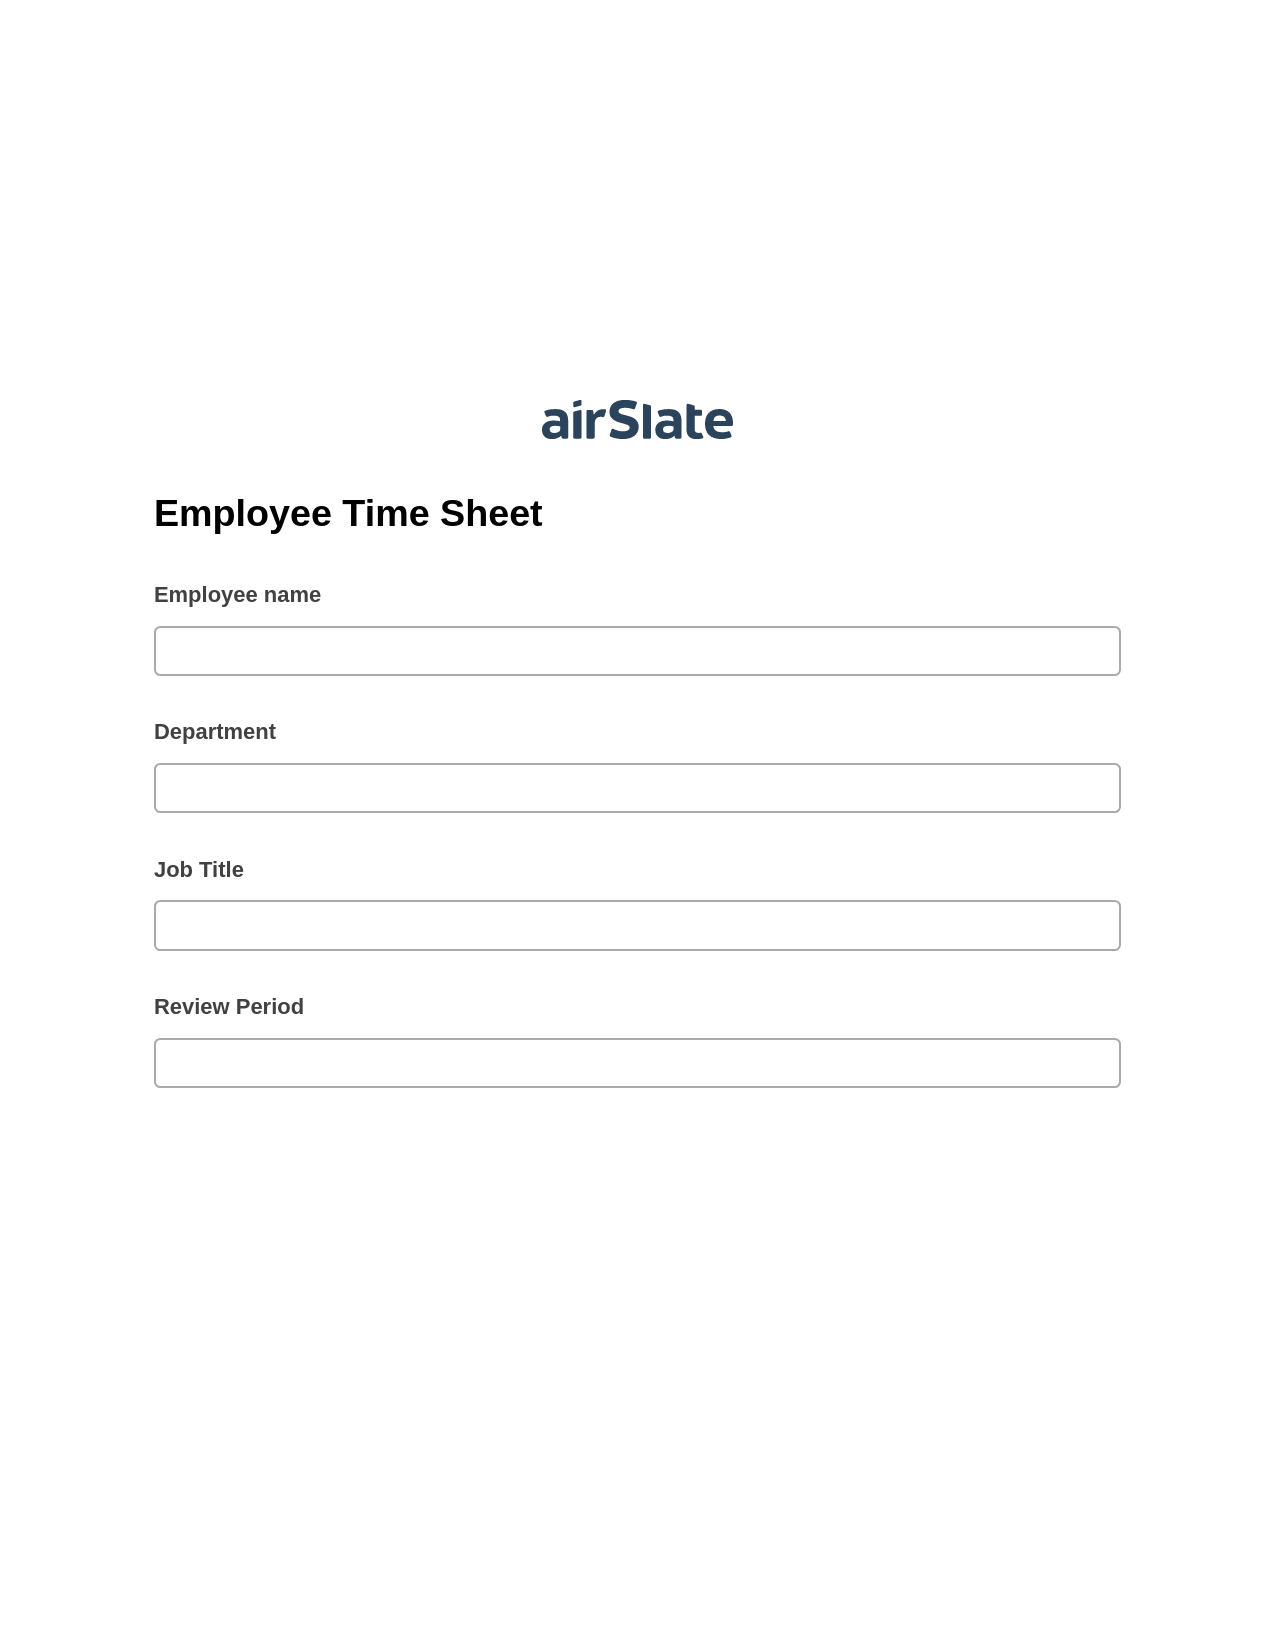 Multirole Employee Time Sheet Pre-fill Document Bot, Slack Notification Bot, Export to Excel 365 Bot